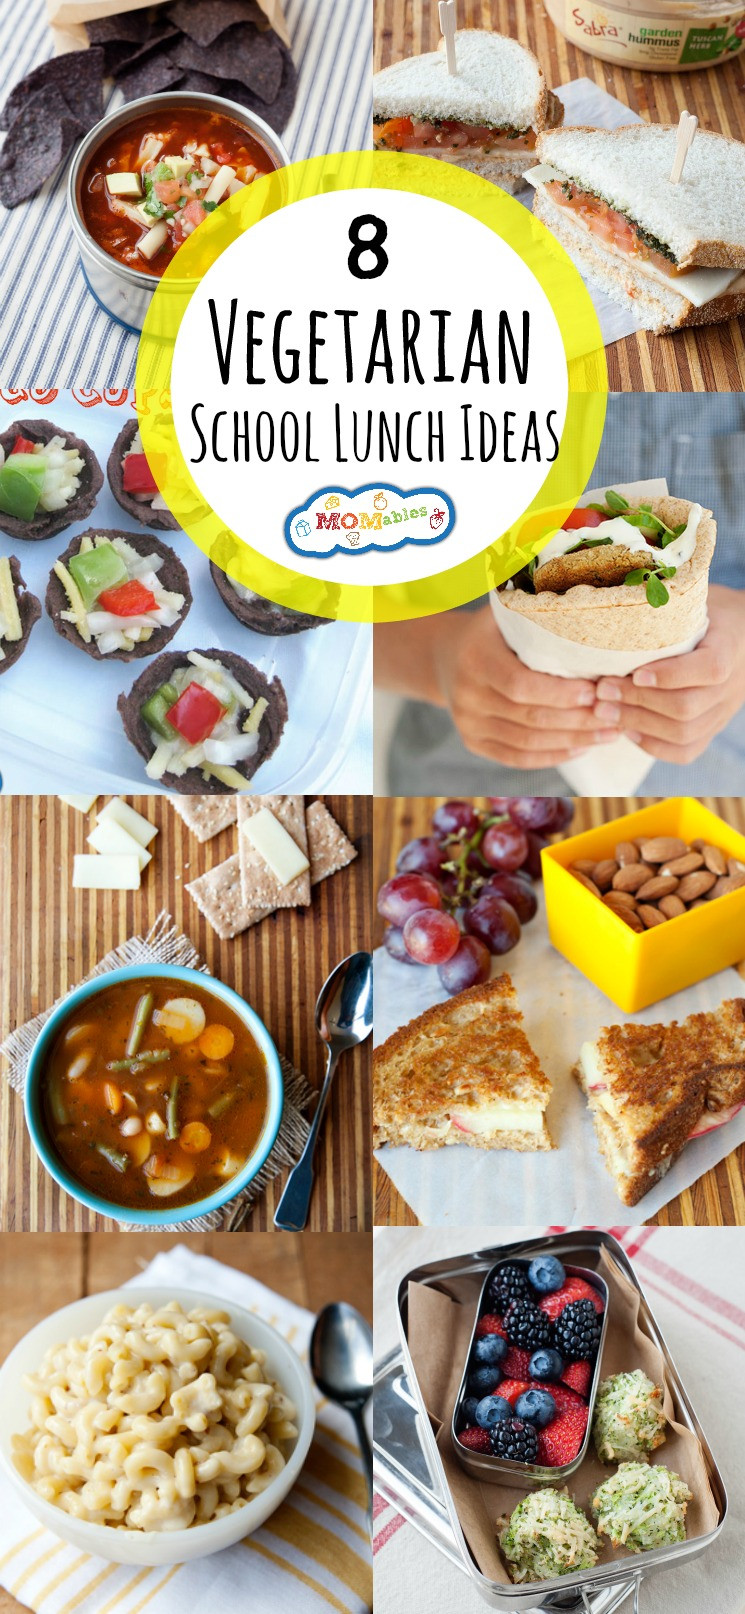 Best Vegetarian Lunch Recipes
 6 School Lunch Ideas to Sneak in Veggies MOMables